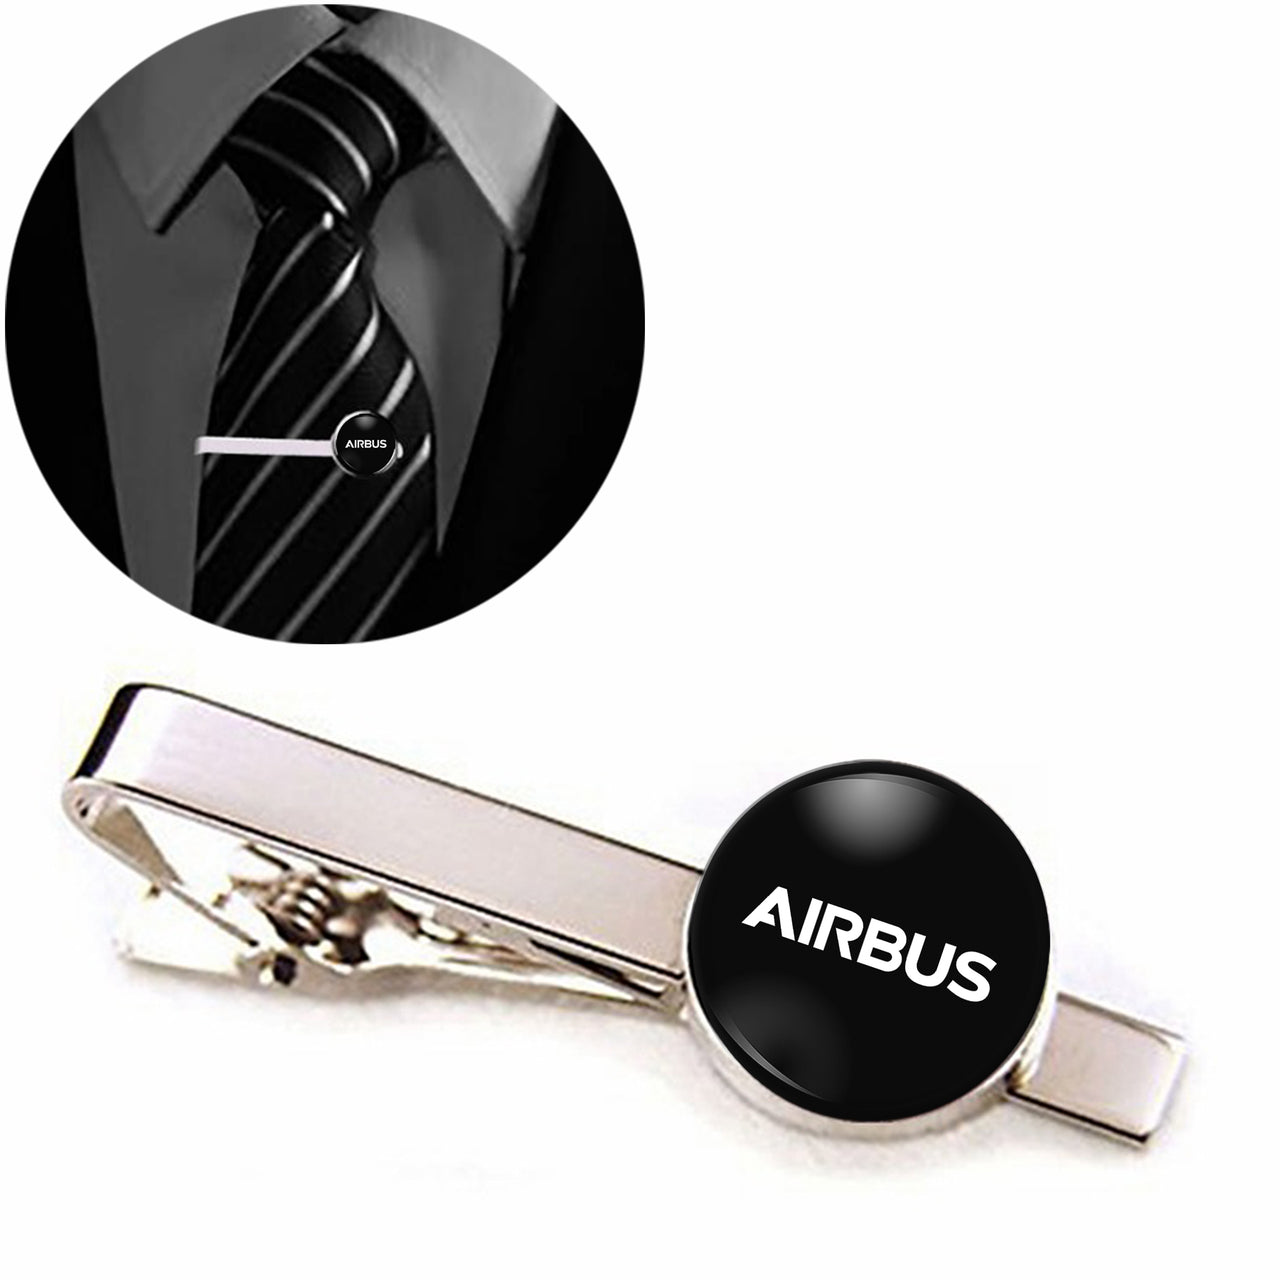 Airbus & Text Designed Tie Clips